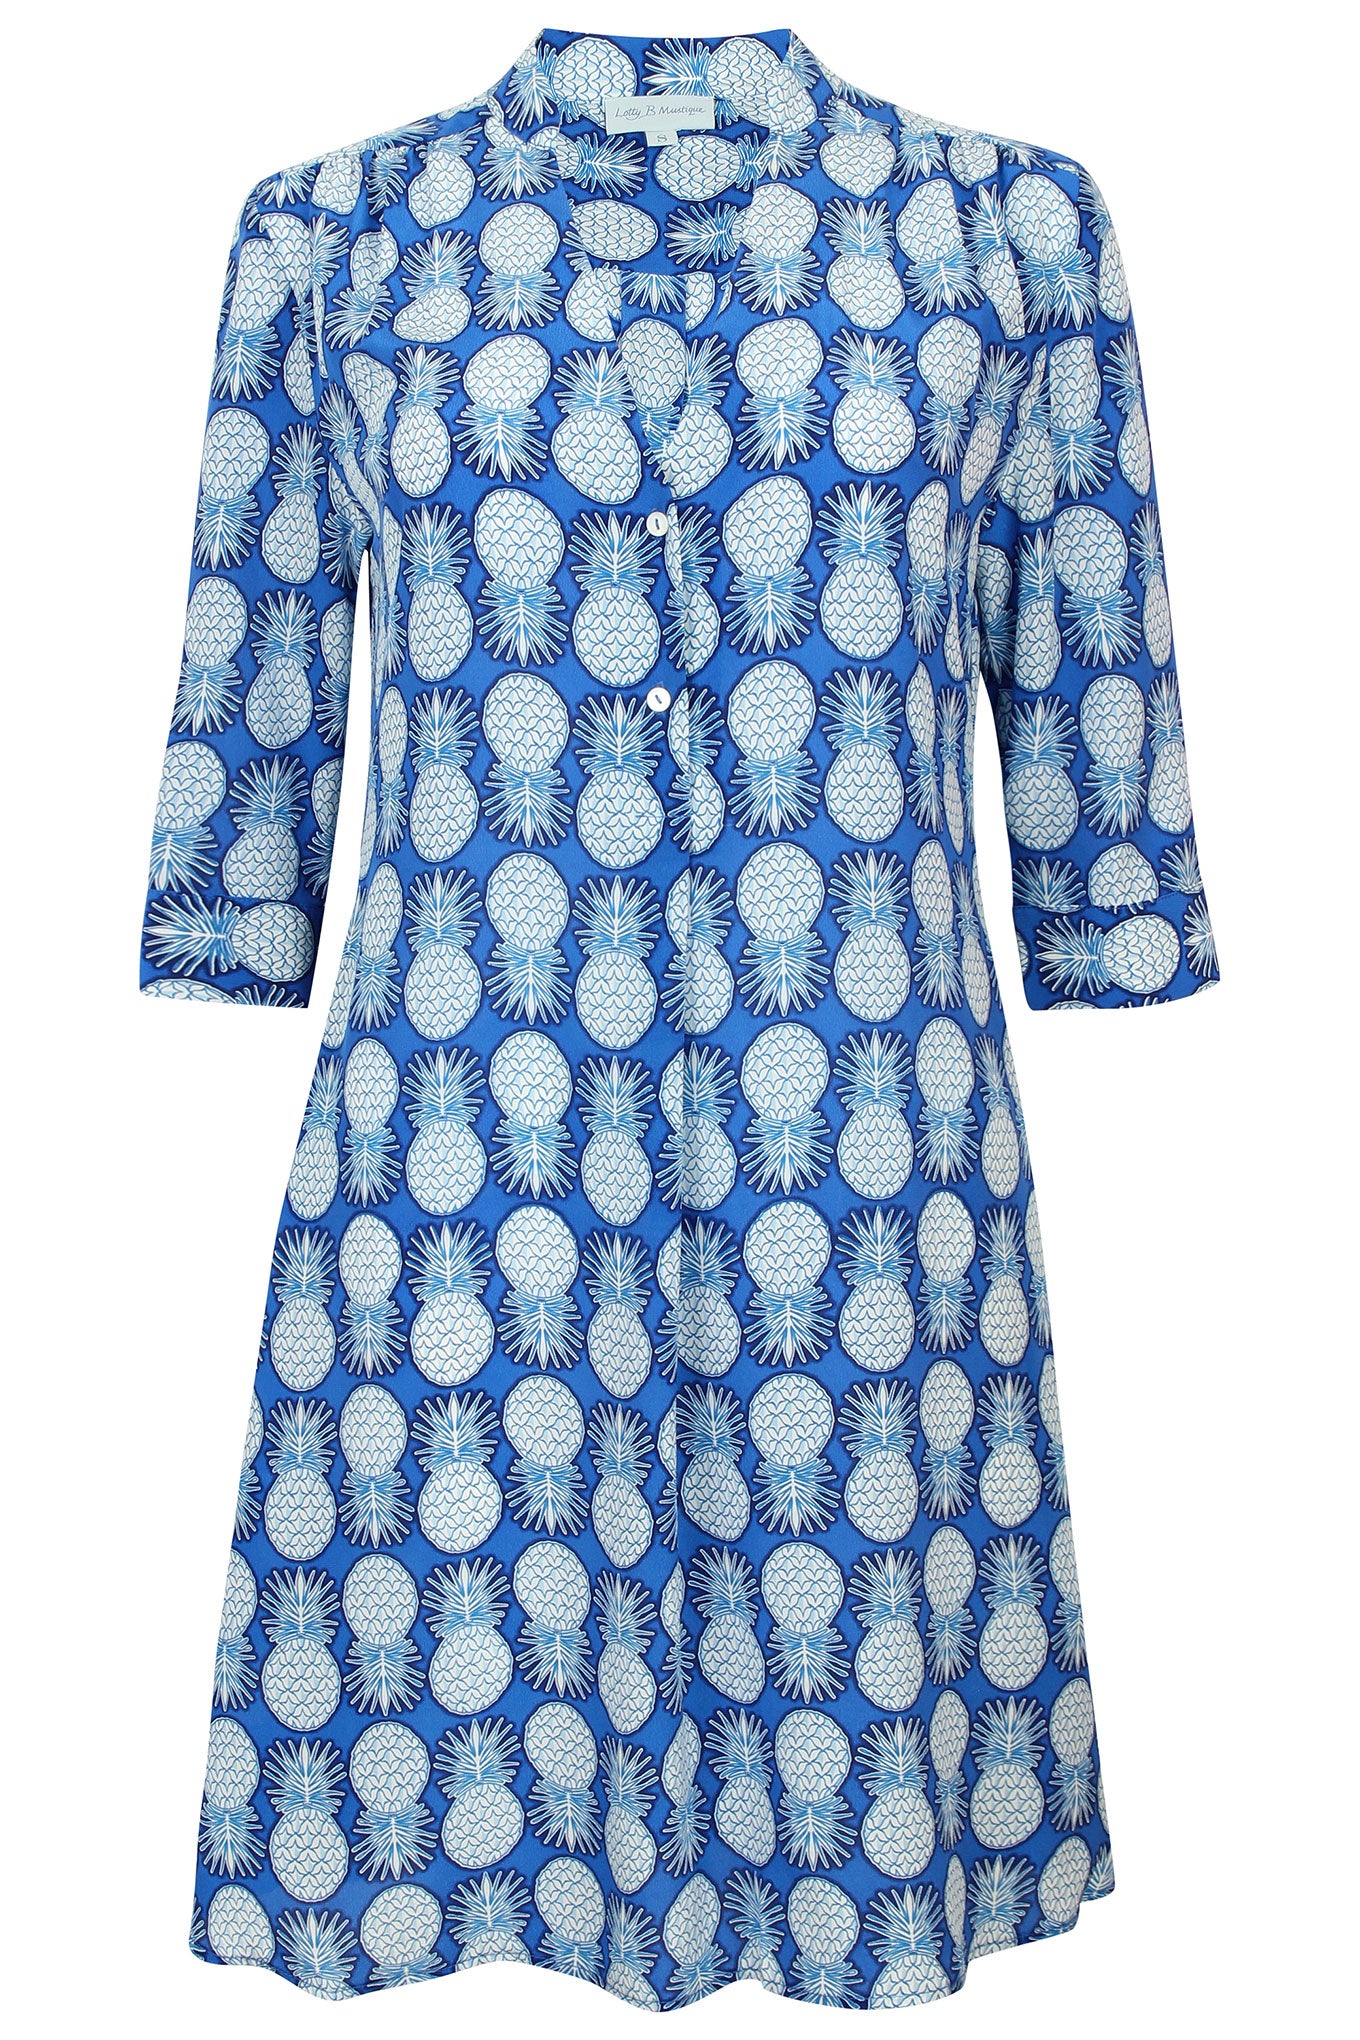 Lotty B Mustique Flared Dress in Silk Crepe-de-Chine: PINEAPPLE - BLUE ...